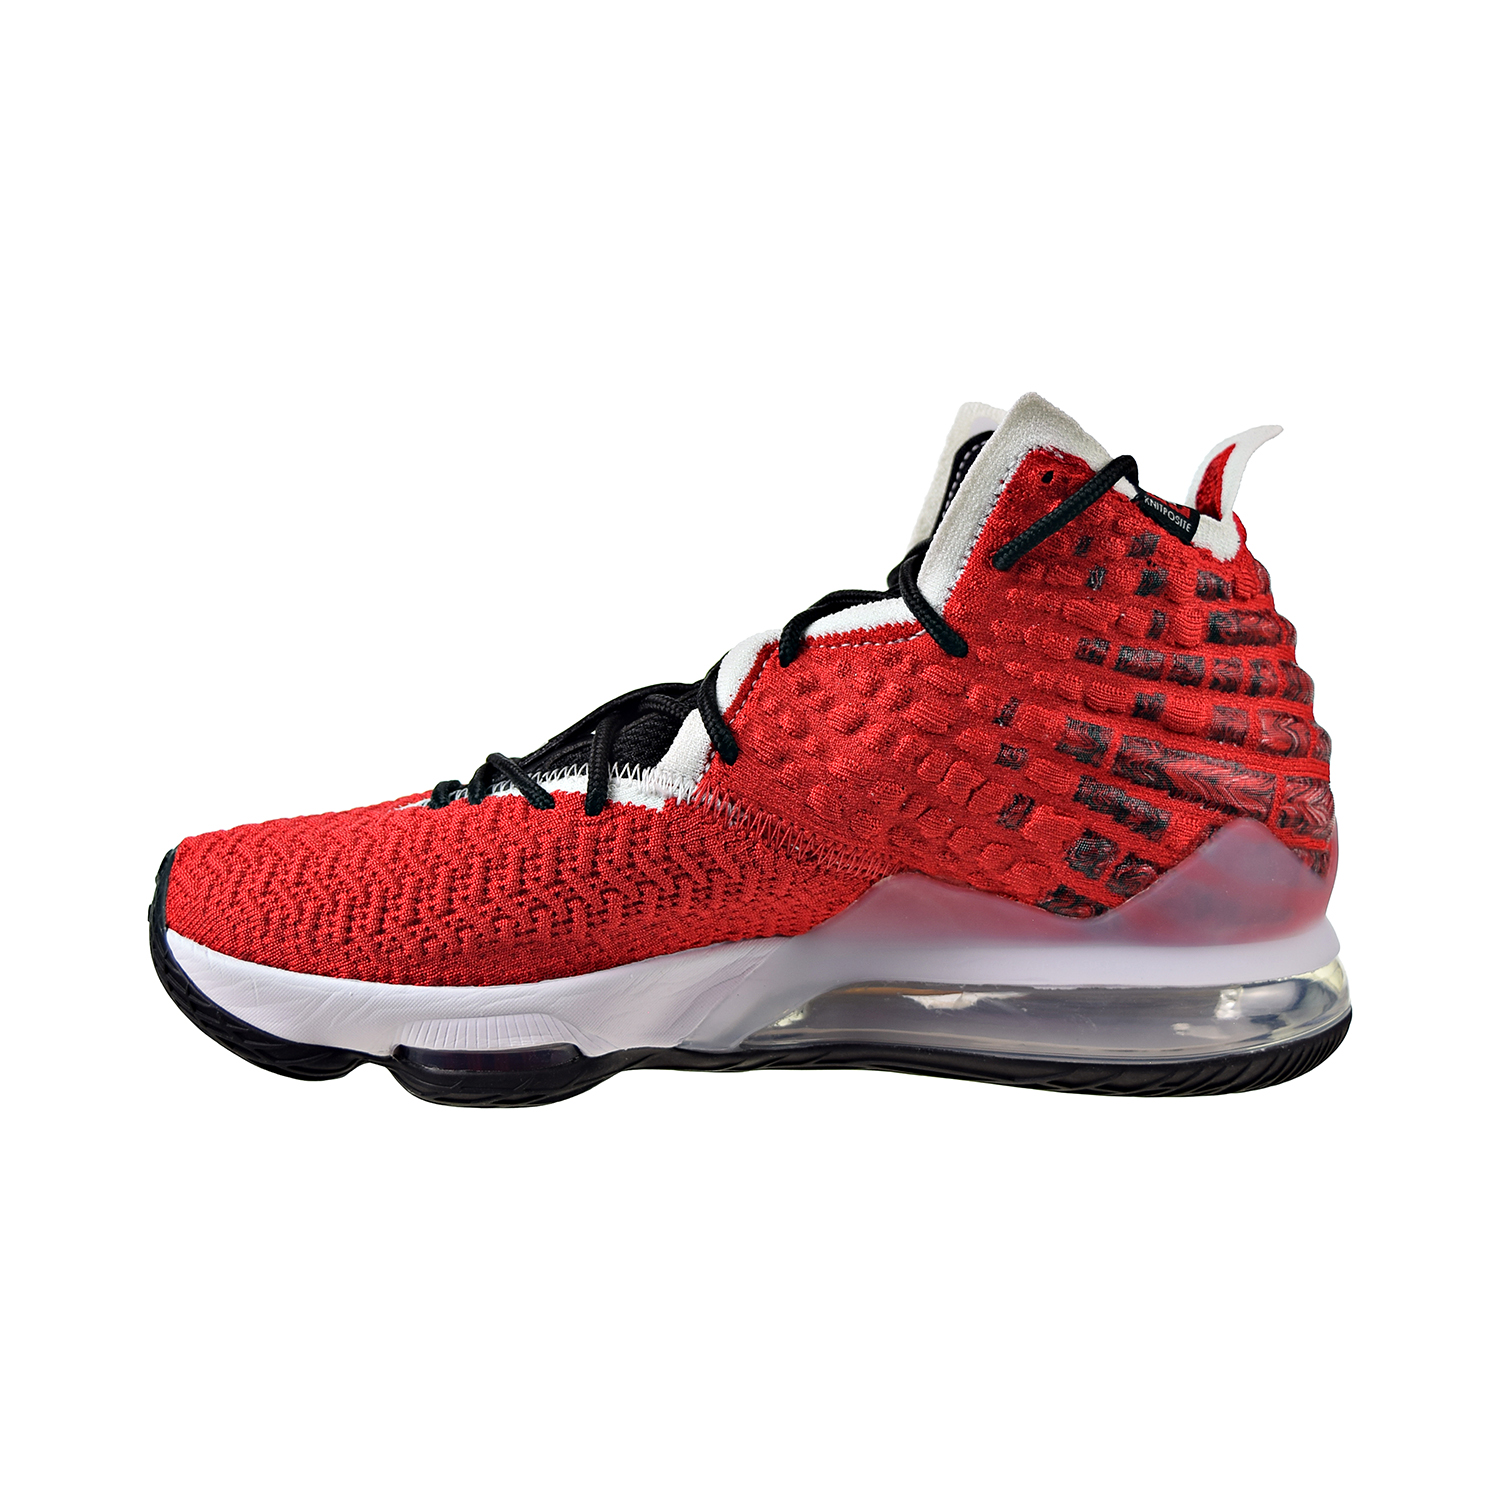 Nike LeBron 17 "Uptempo" Men's Basketball Shoes University Red-Black bq3177-601 - image 4 of 6